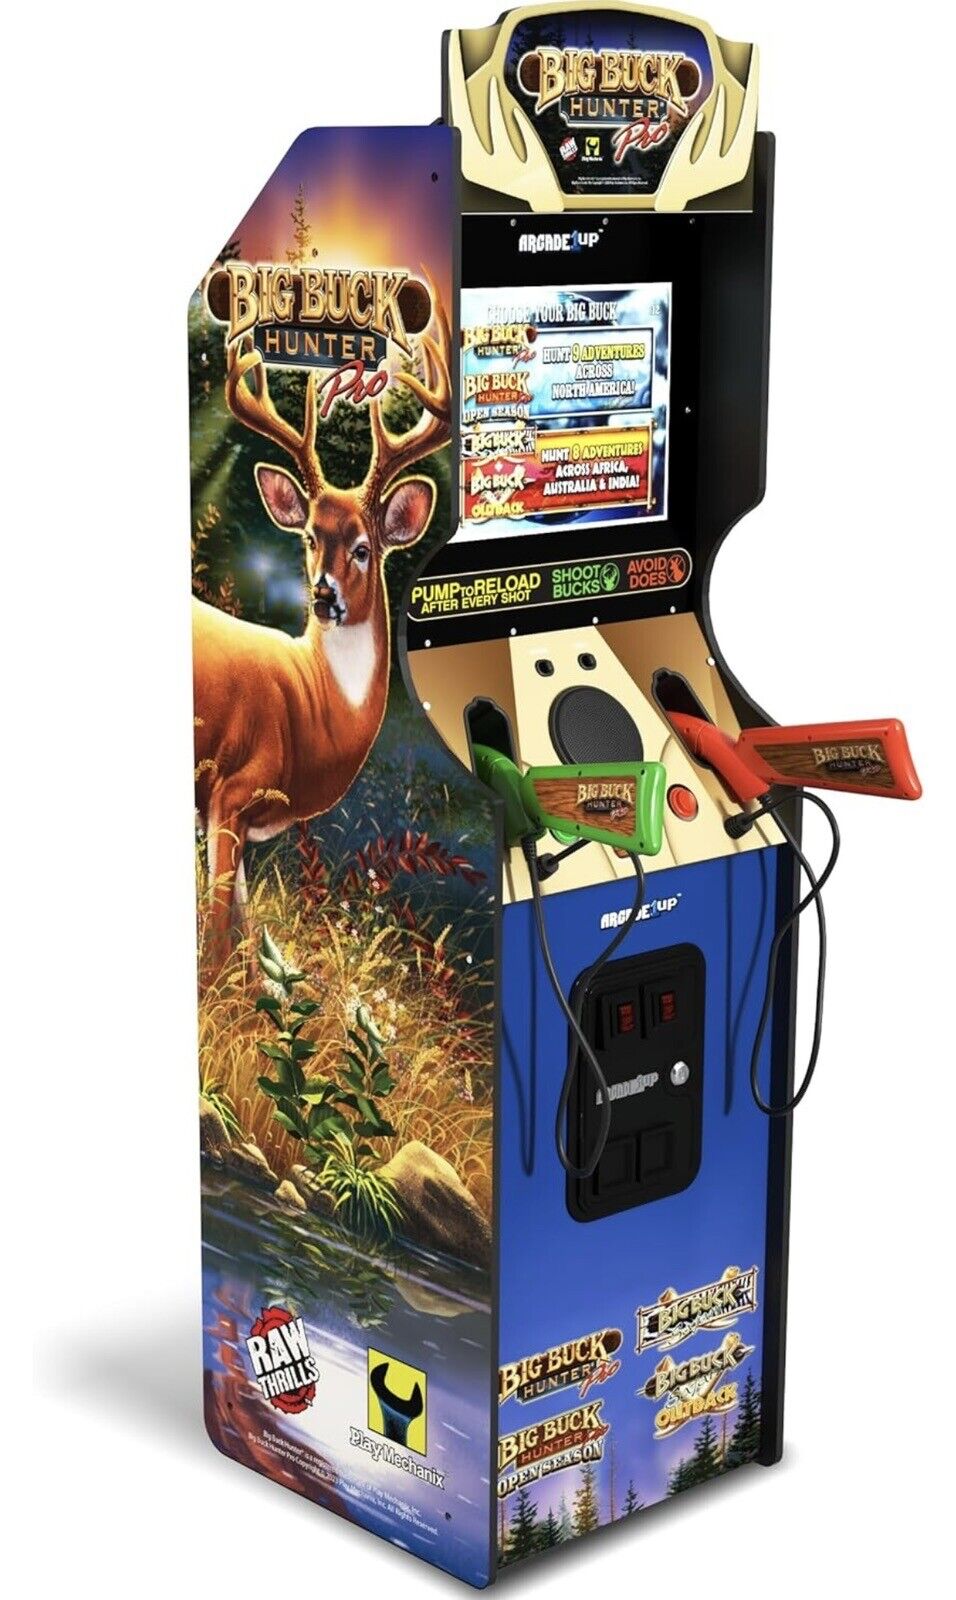 Arcade1Up Big Buck Hunter Pro Deluxe Arcade Machine Video Game Shooter 2 Player